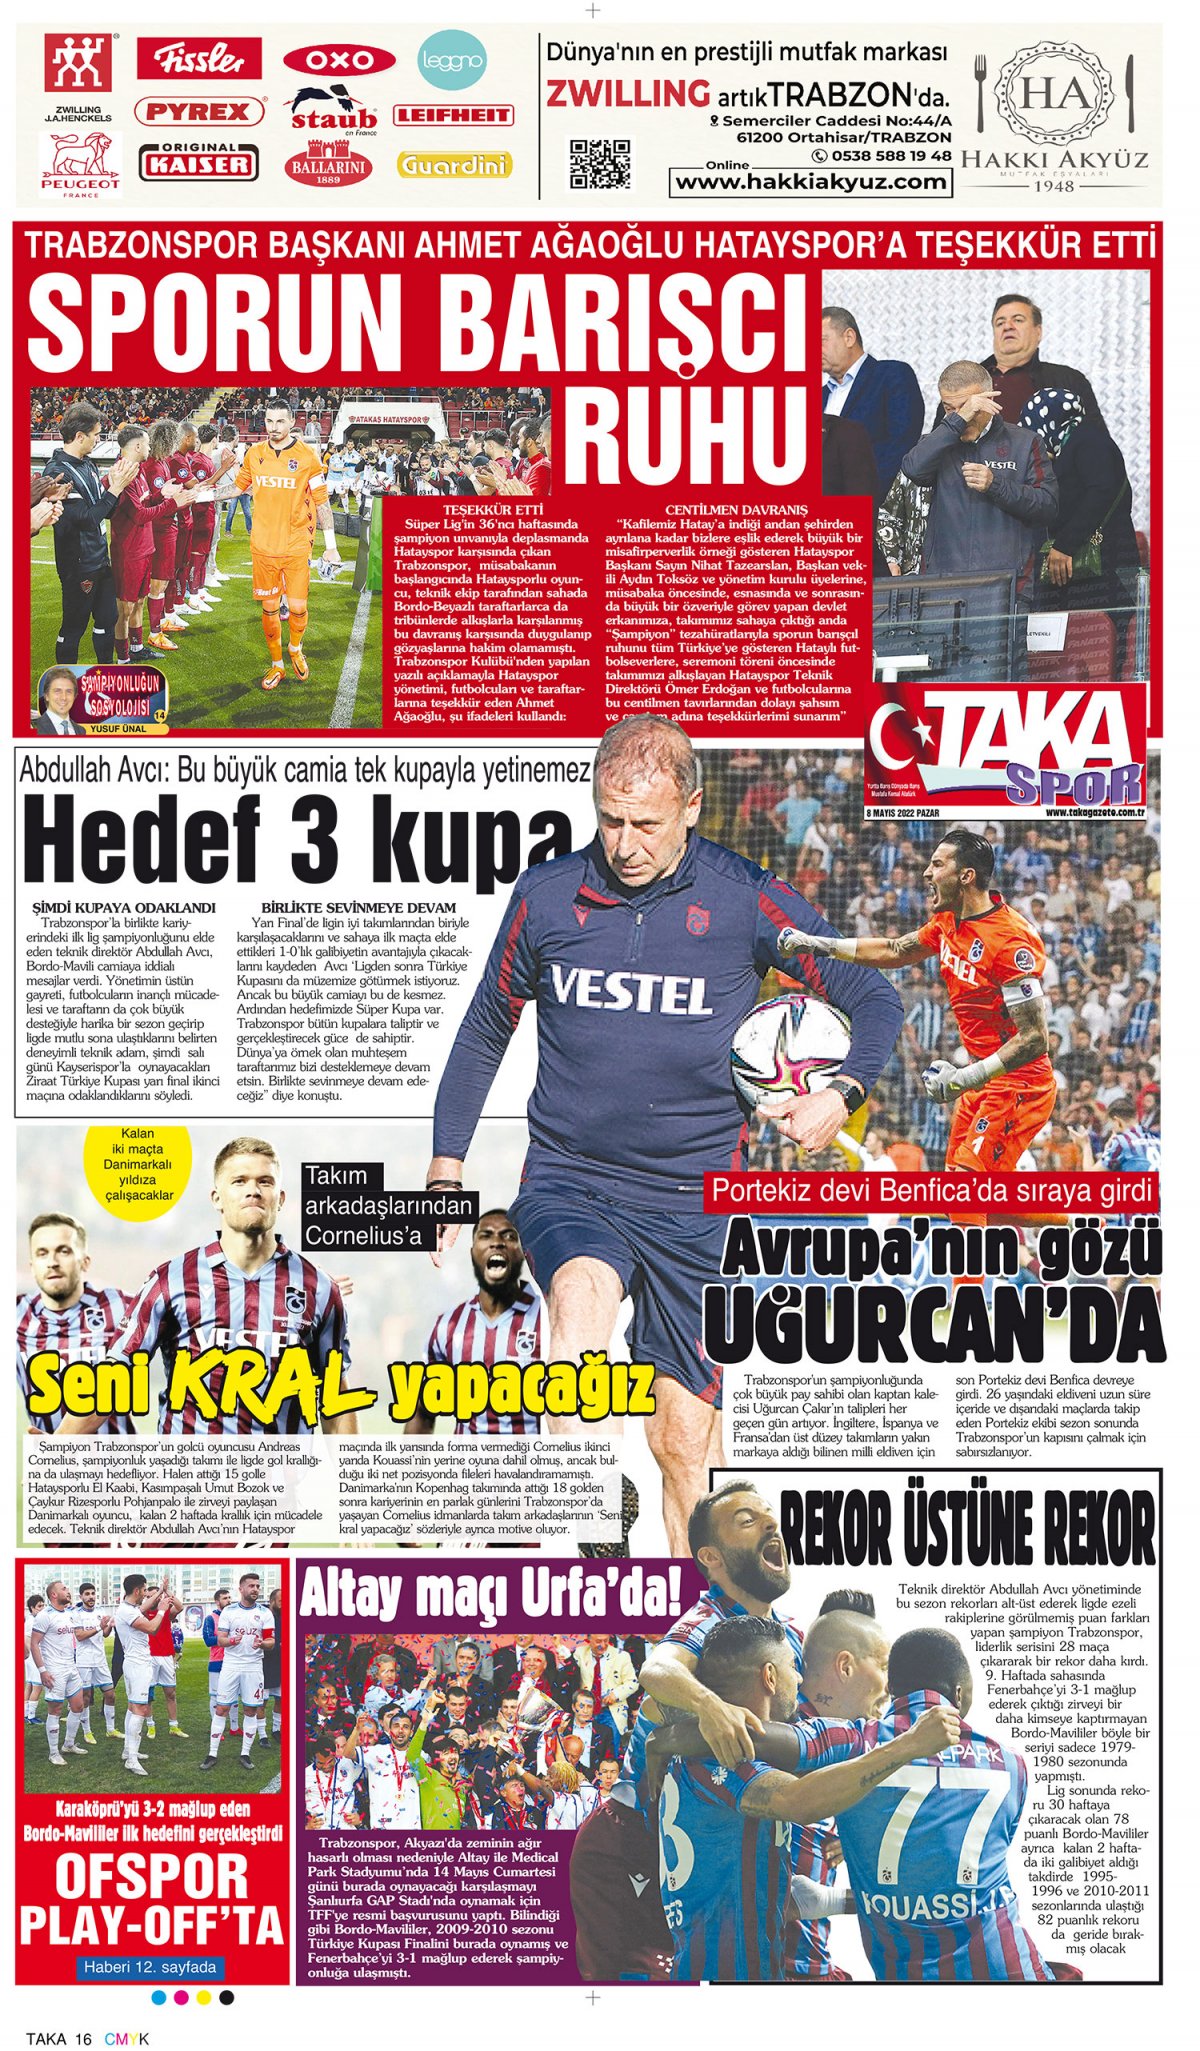 Taka Gazete - 08.05.2022 Manşeti